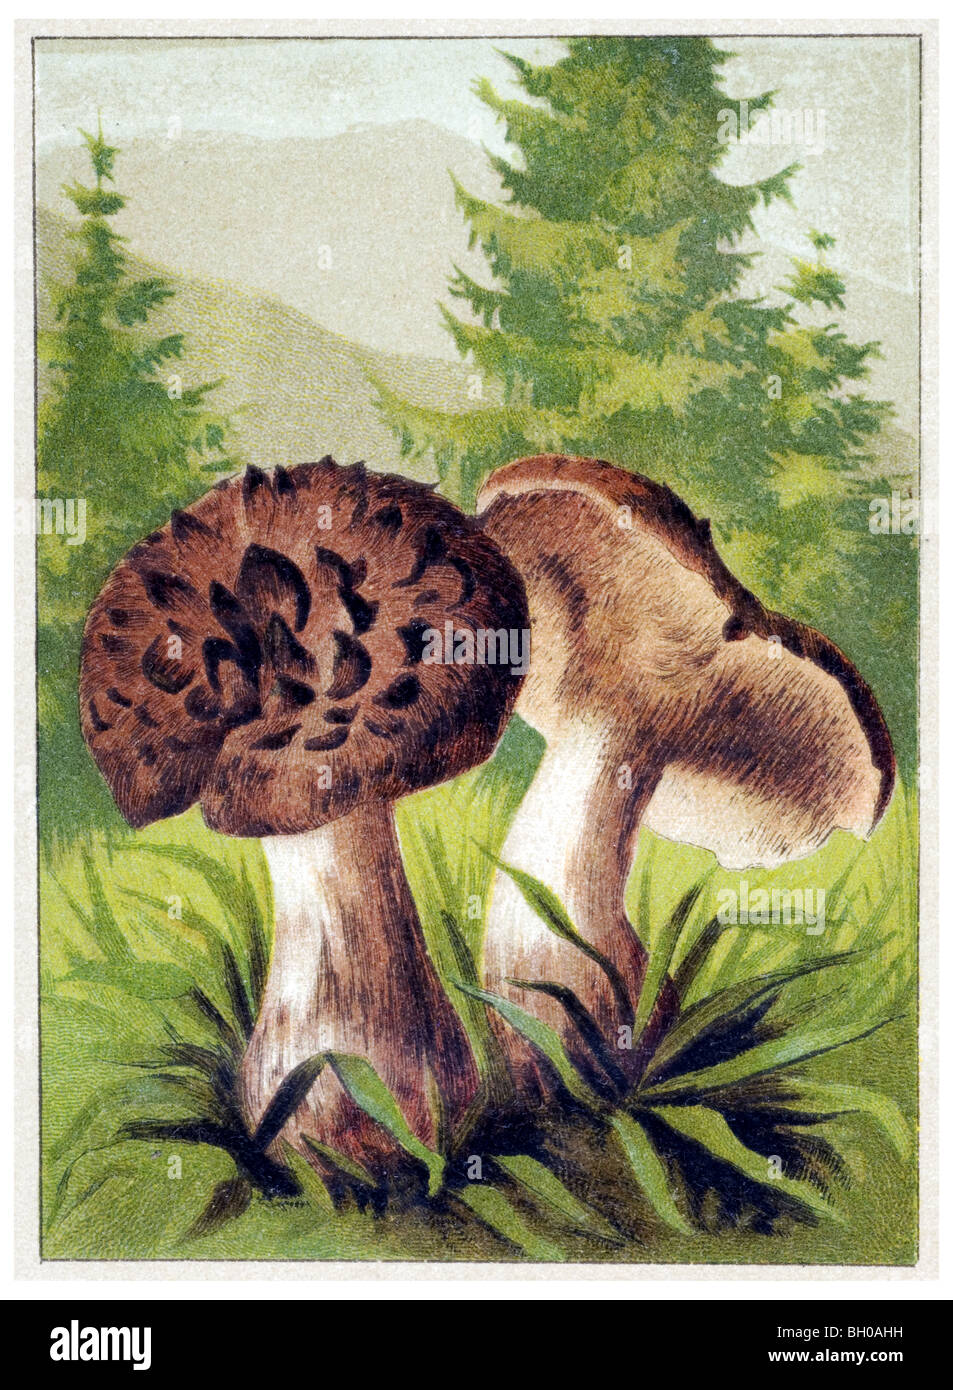 Shingled scaly hedgehog fungus mushroom Stock Photo